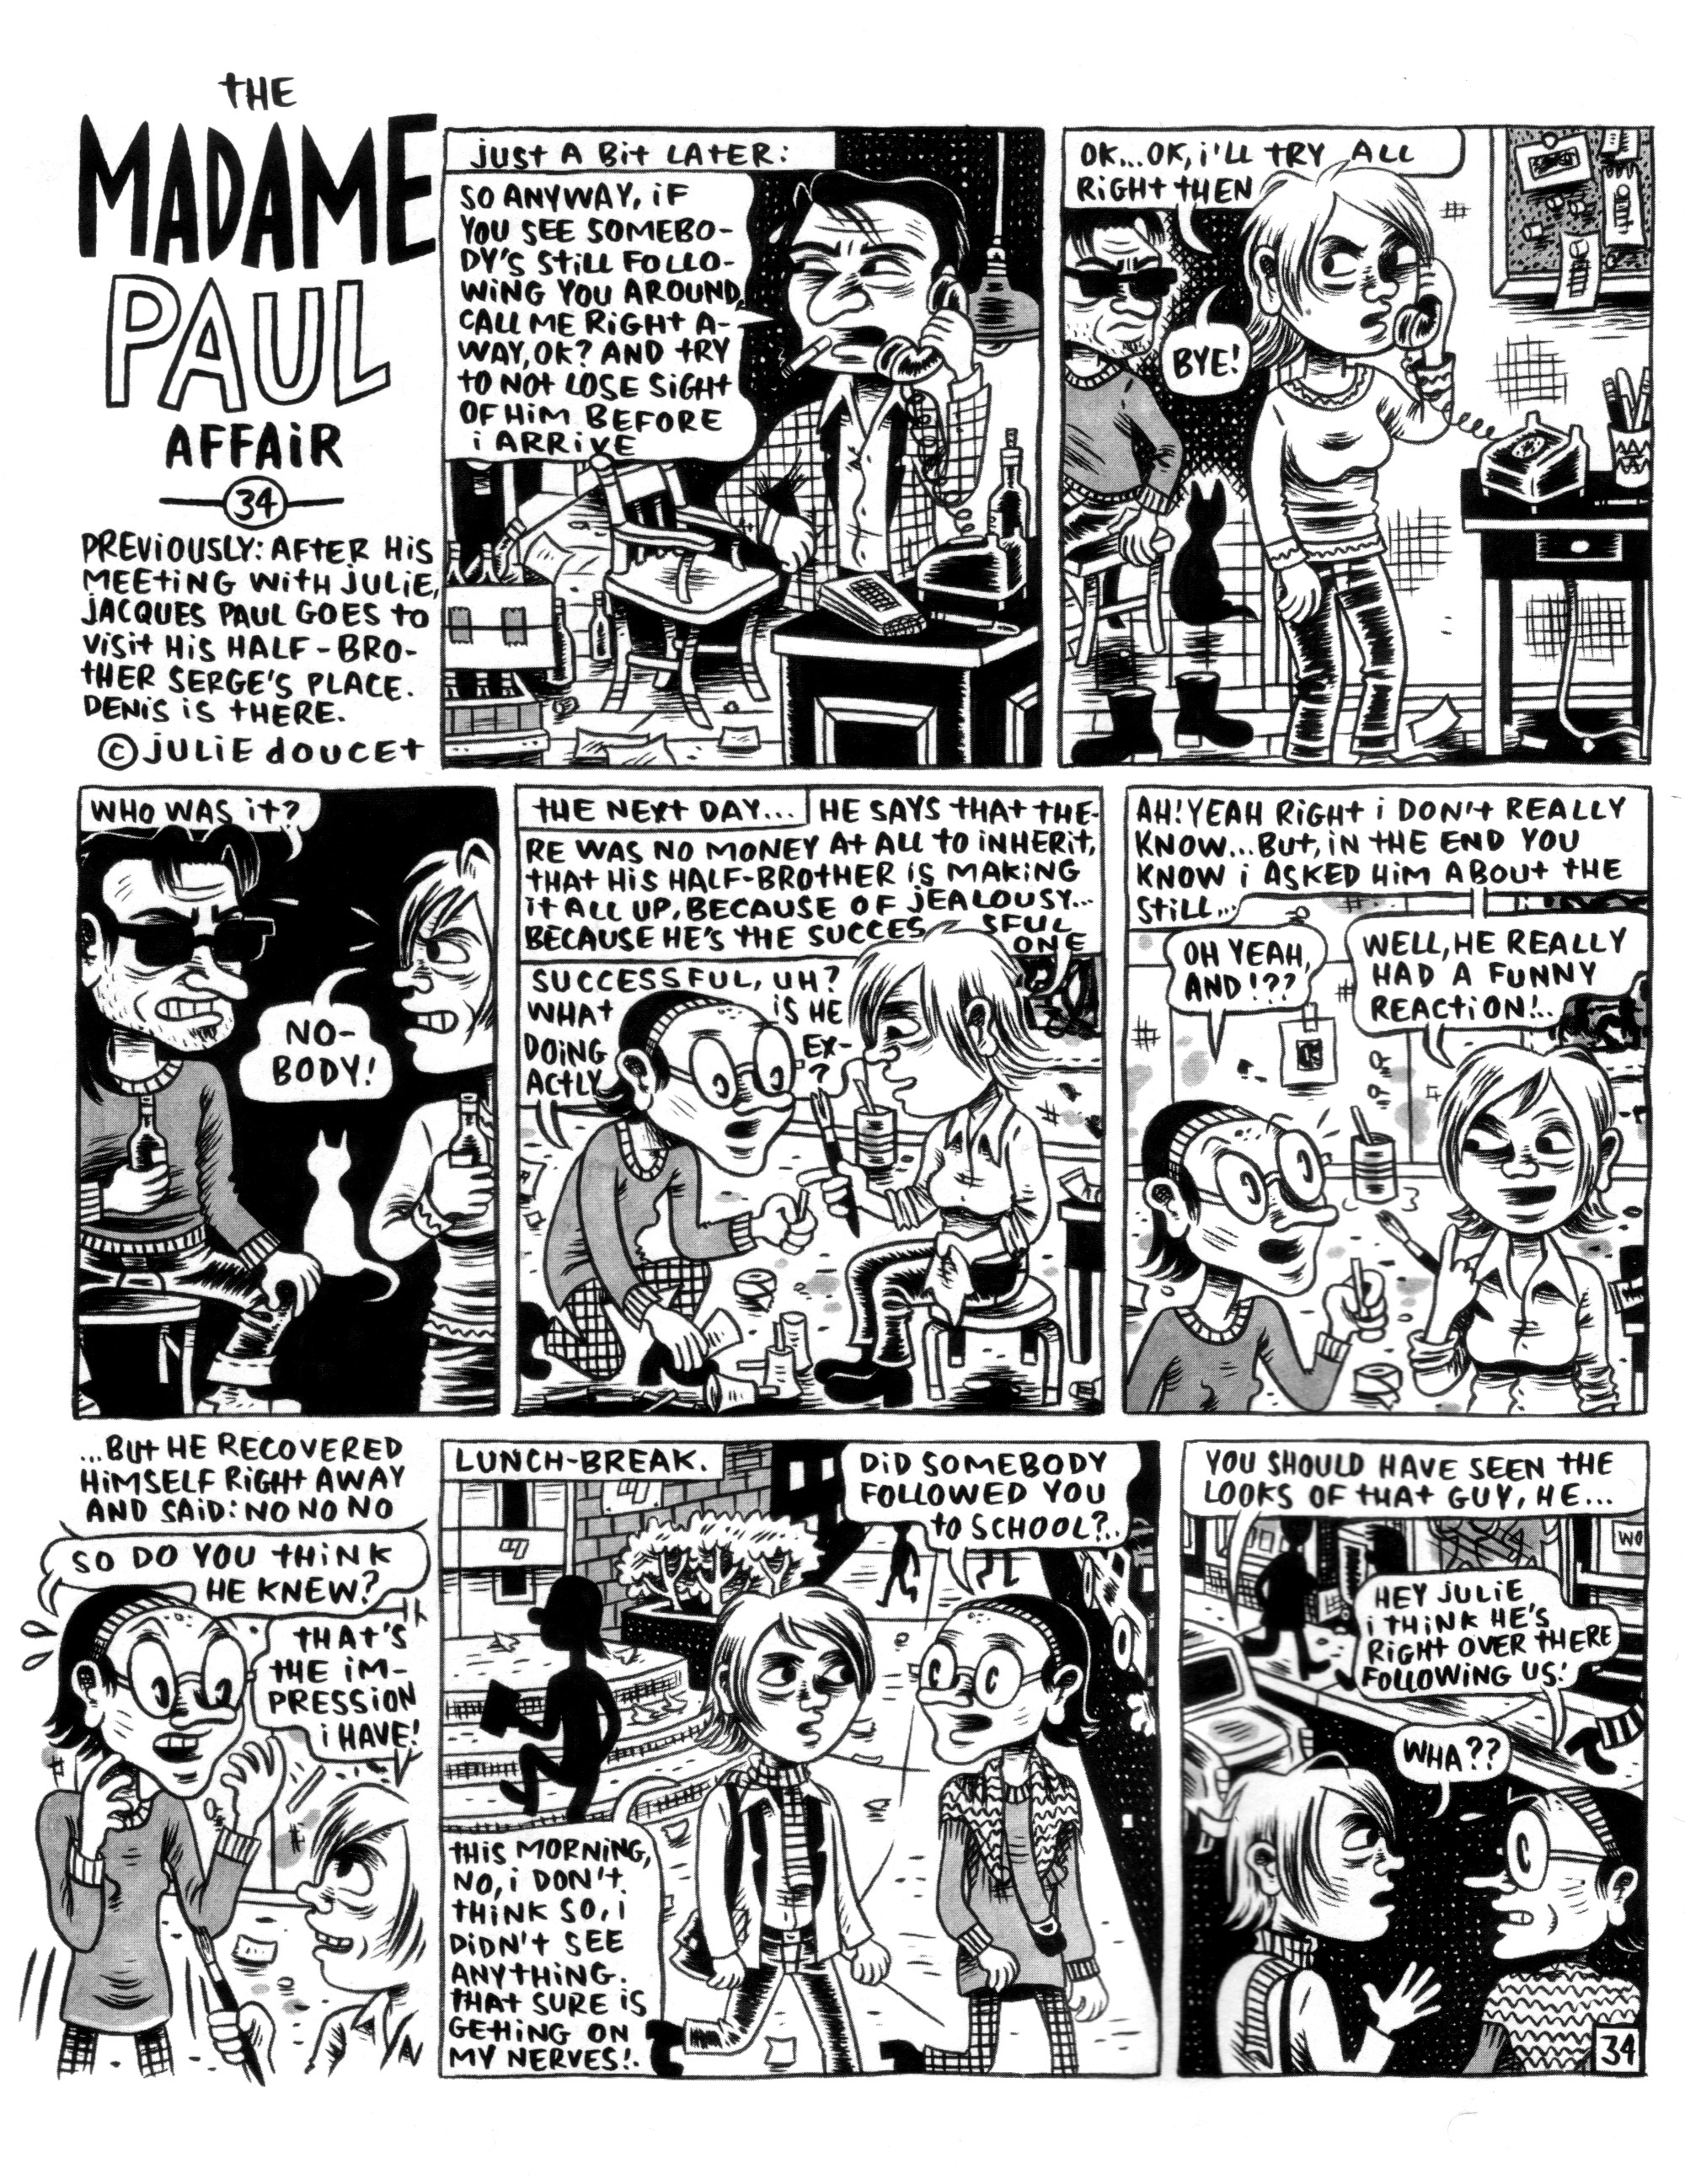 Read online Madame Paul Affair comic -  Issue # Full - 41